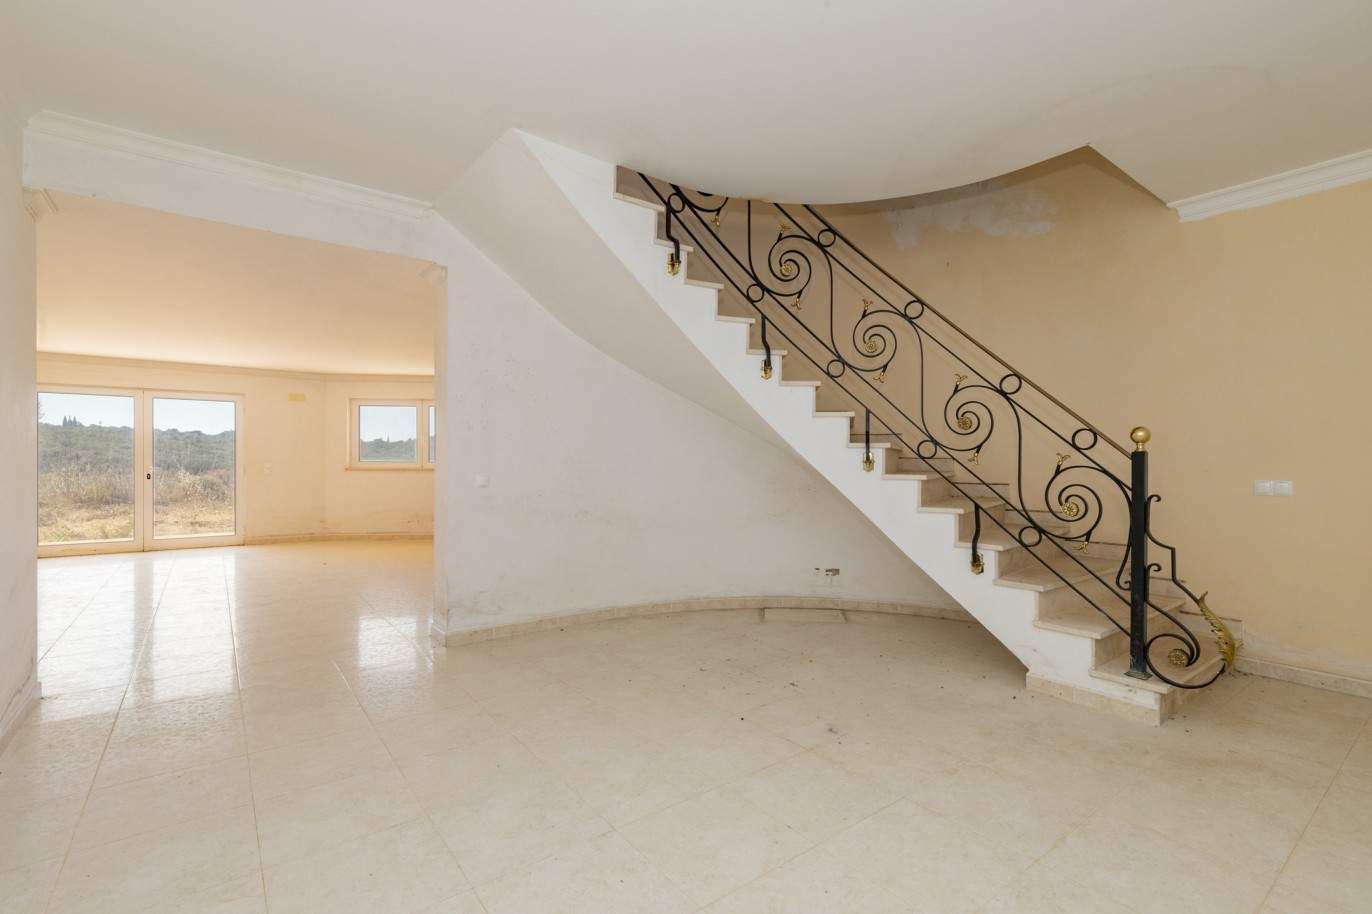 4 Bedroom Villa à vendre à Monte Judeu, Portimão, Algarve_207308